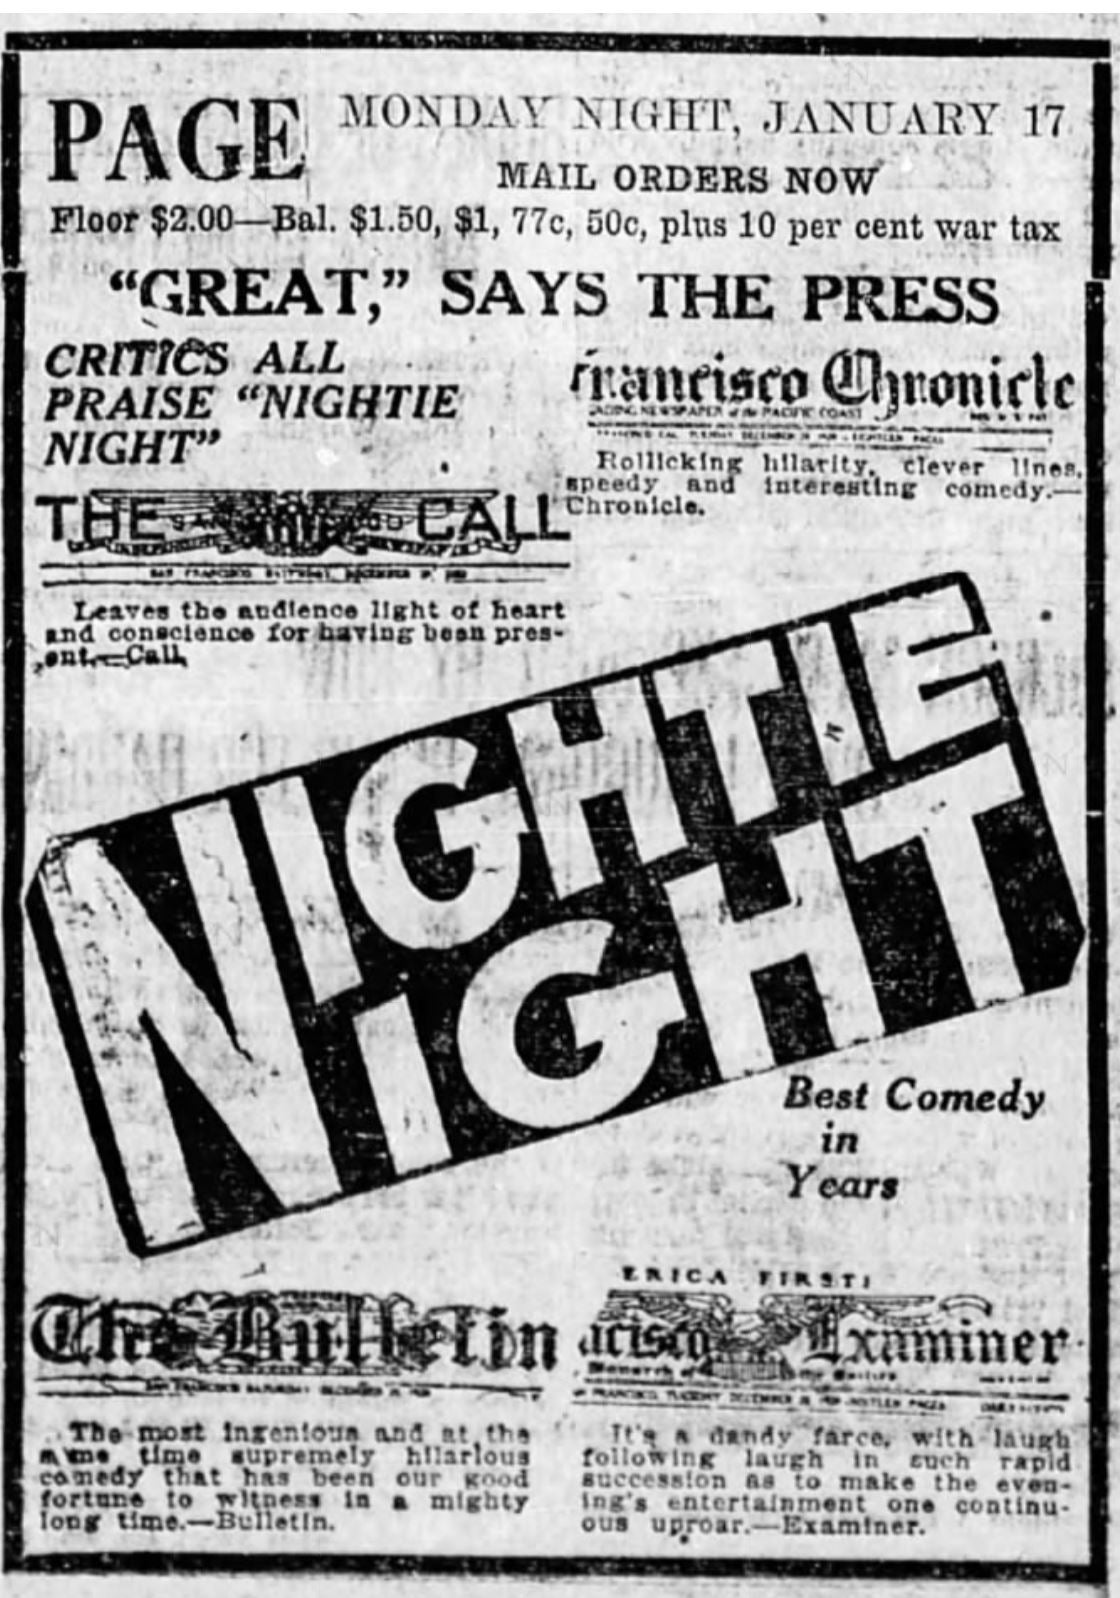 Nightie Night at the Page, 1921